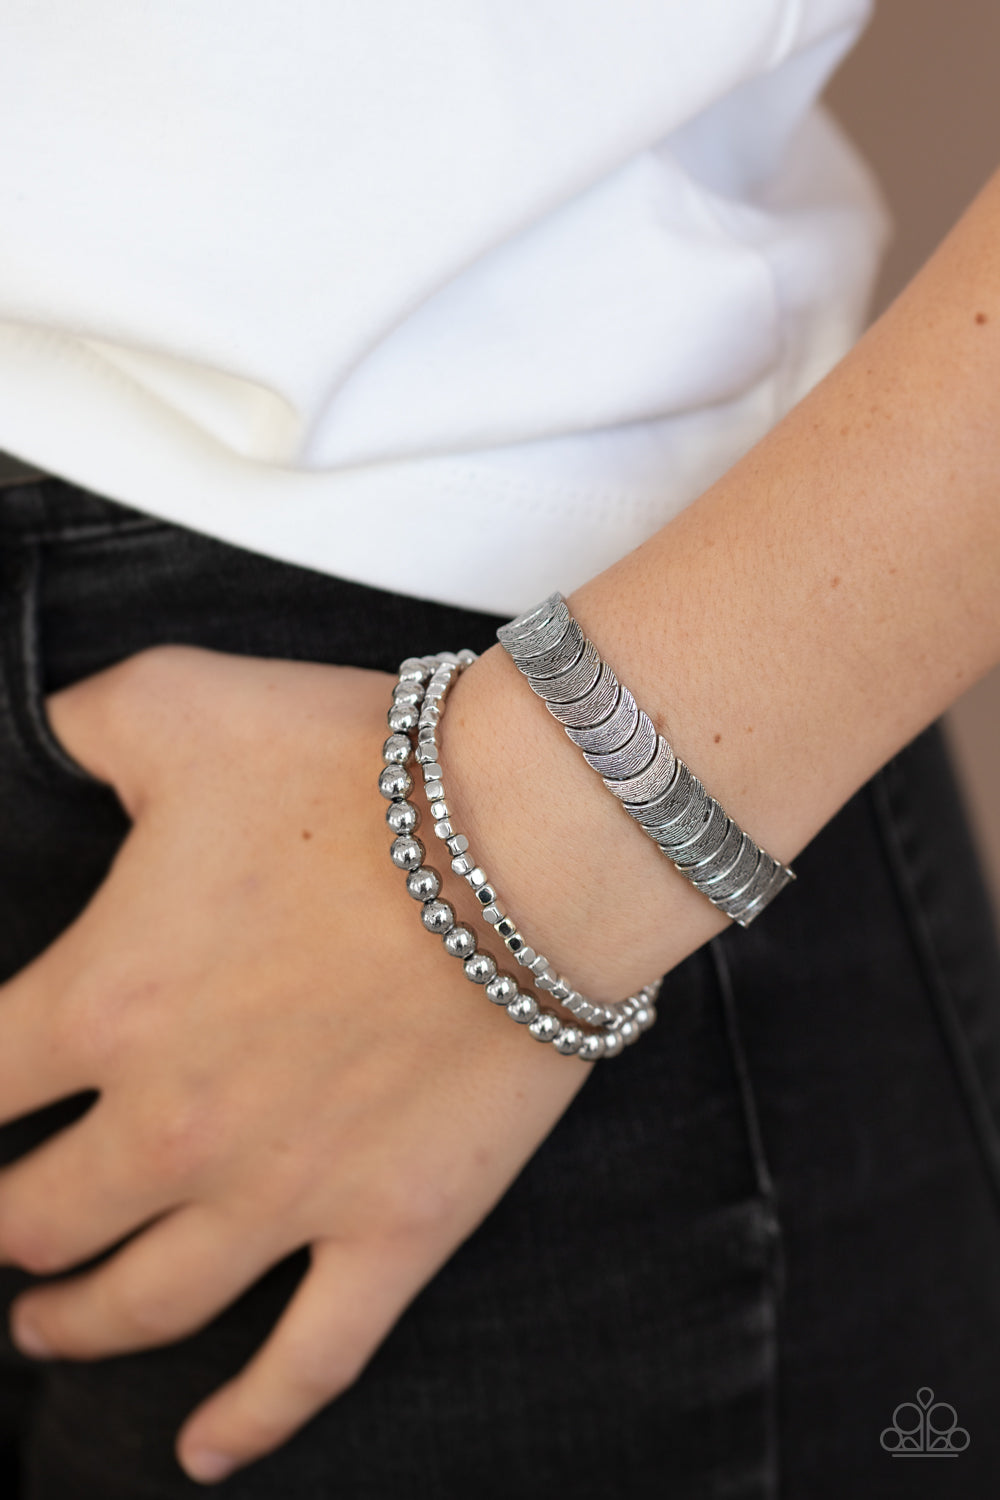 Paparazzi LAYER It On Me - Silver - Stretchy Band - Set of 3 Bracelets - $5 Jewelry with Ashley Swint